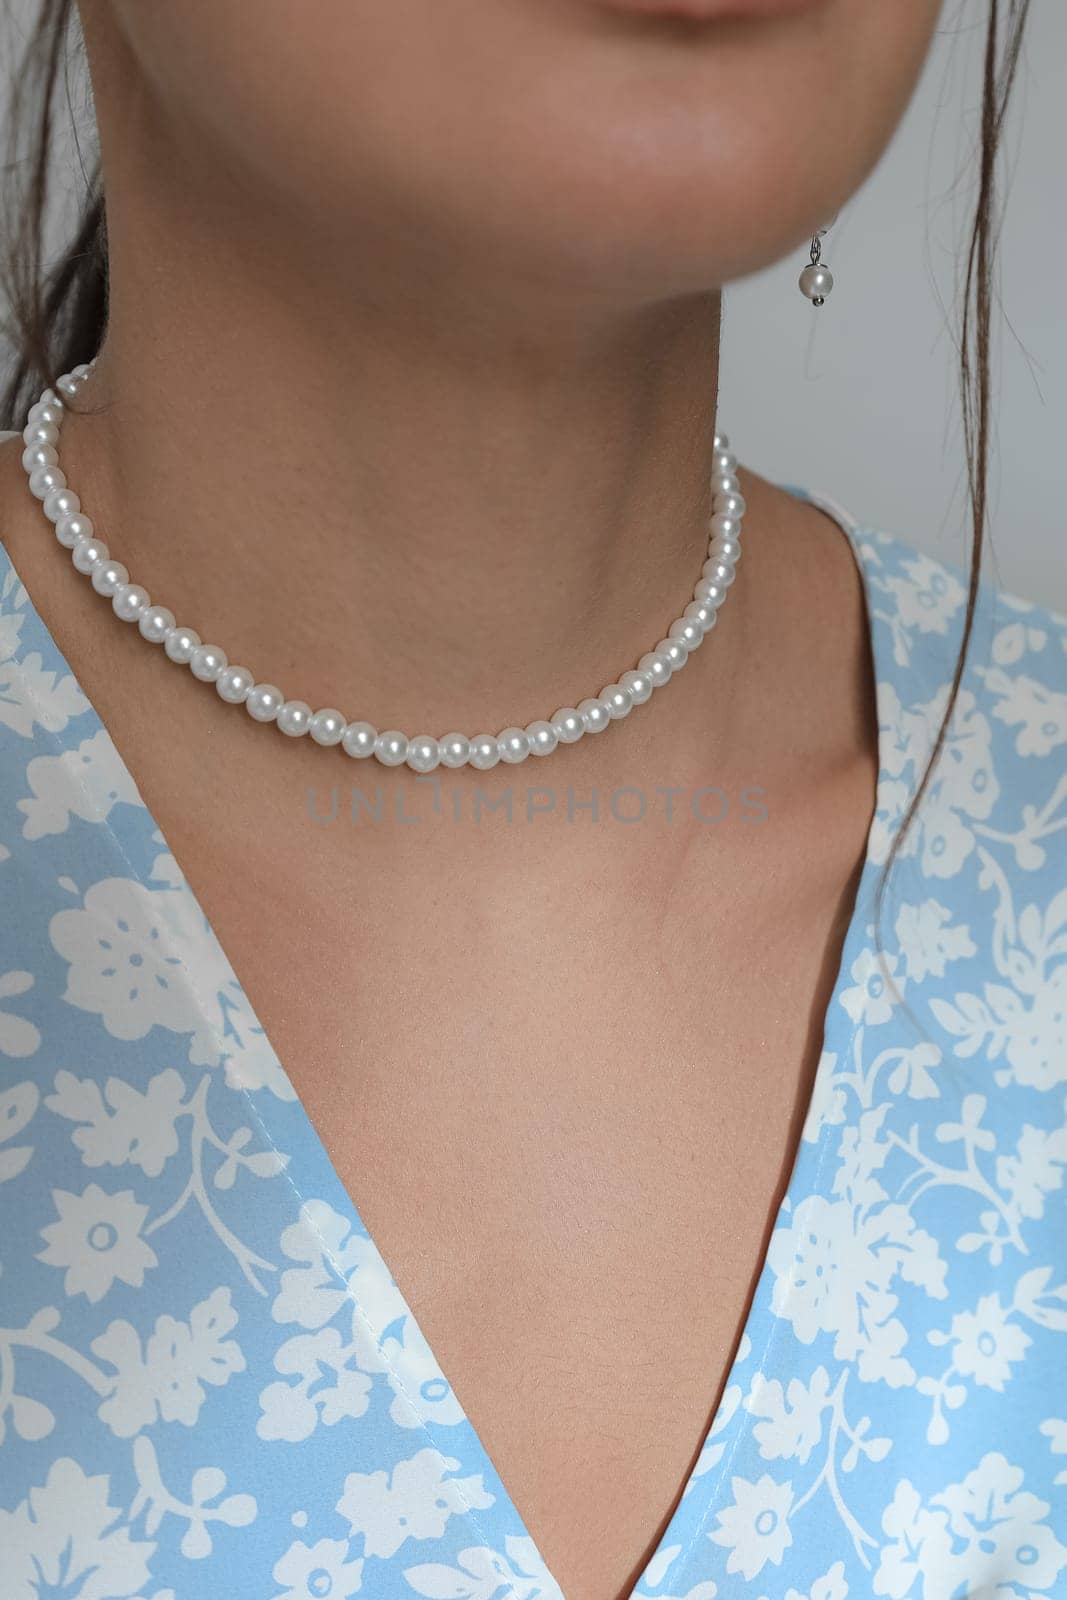 A vertical closeup of a pearl necklace around a Caucasian female's neck